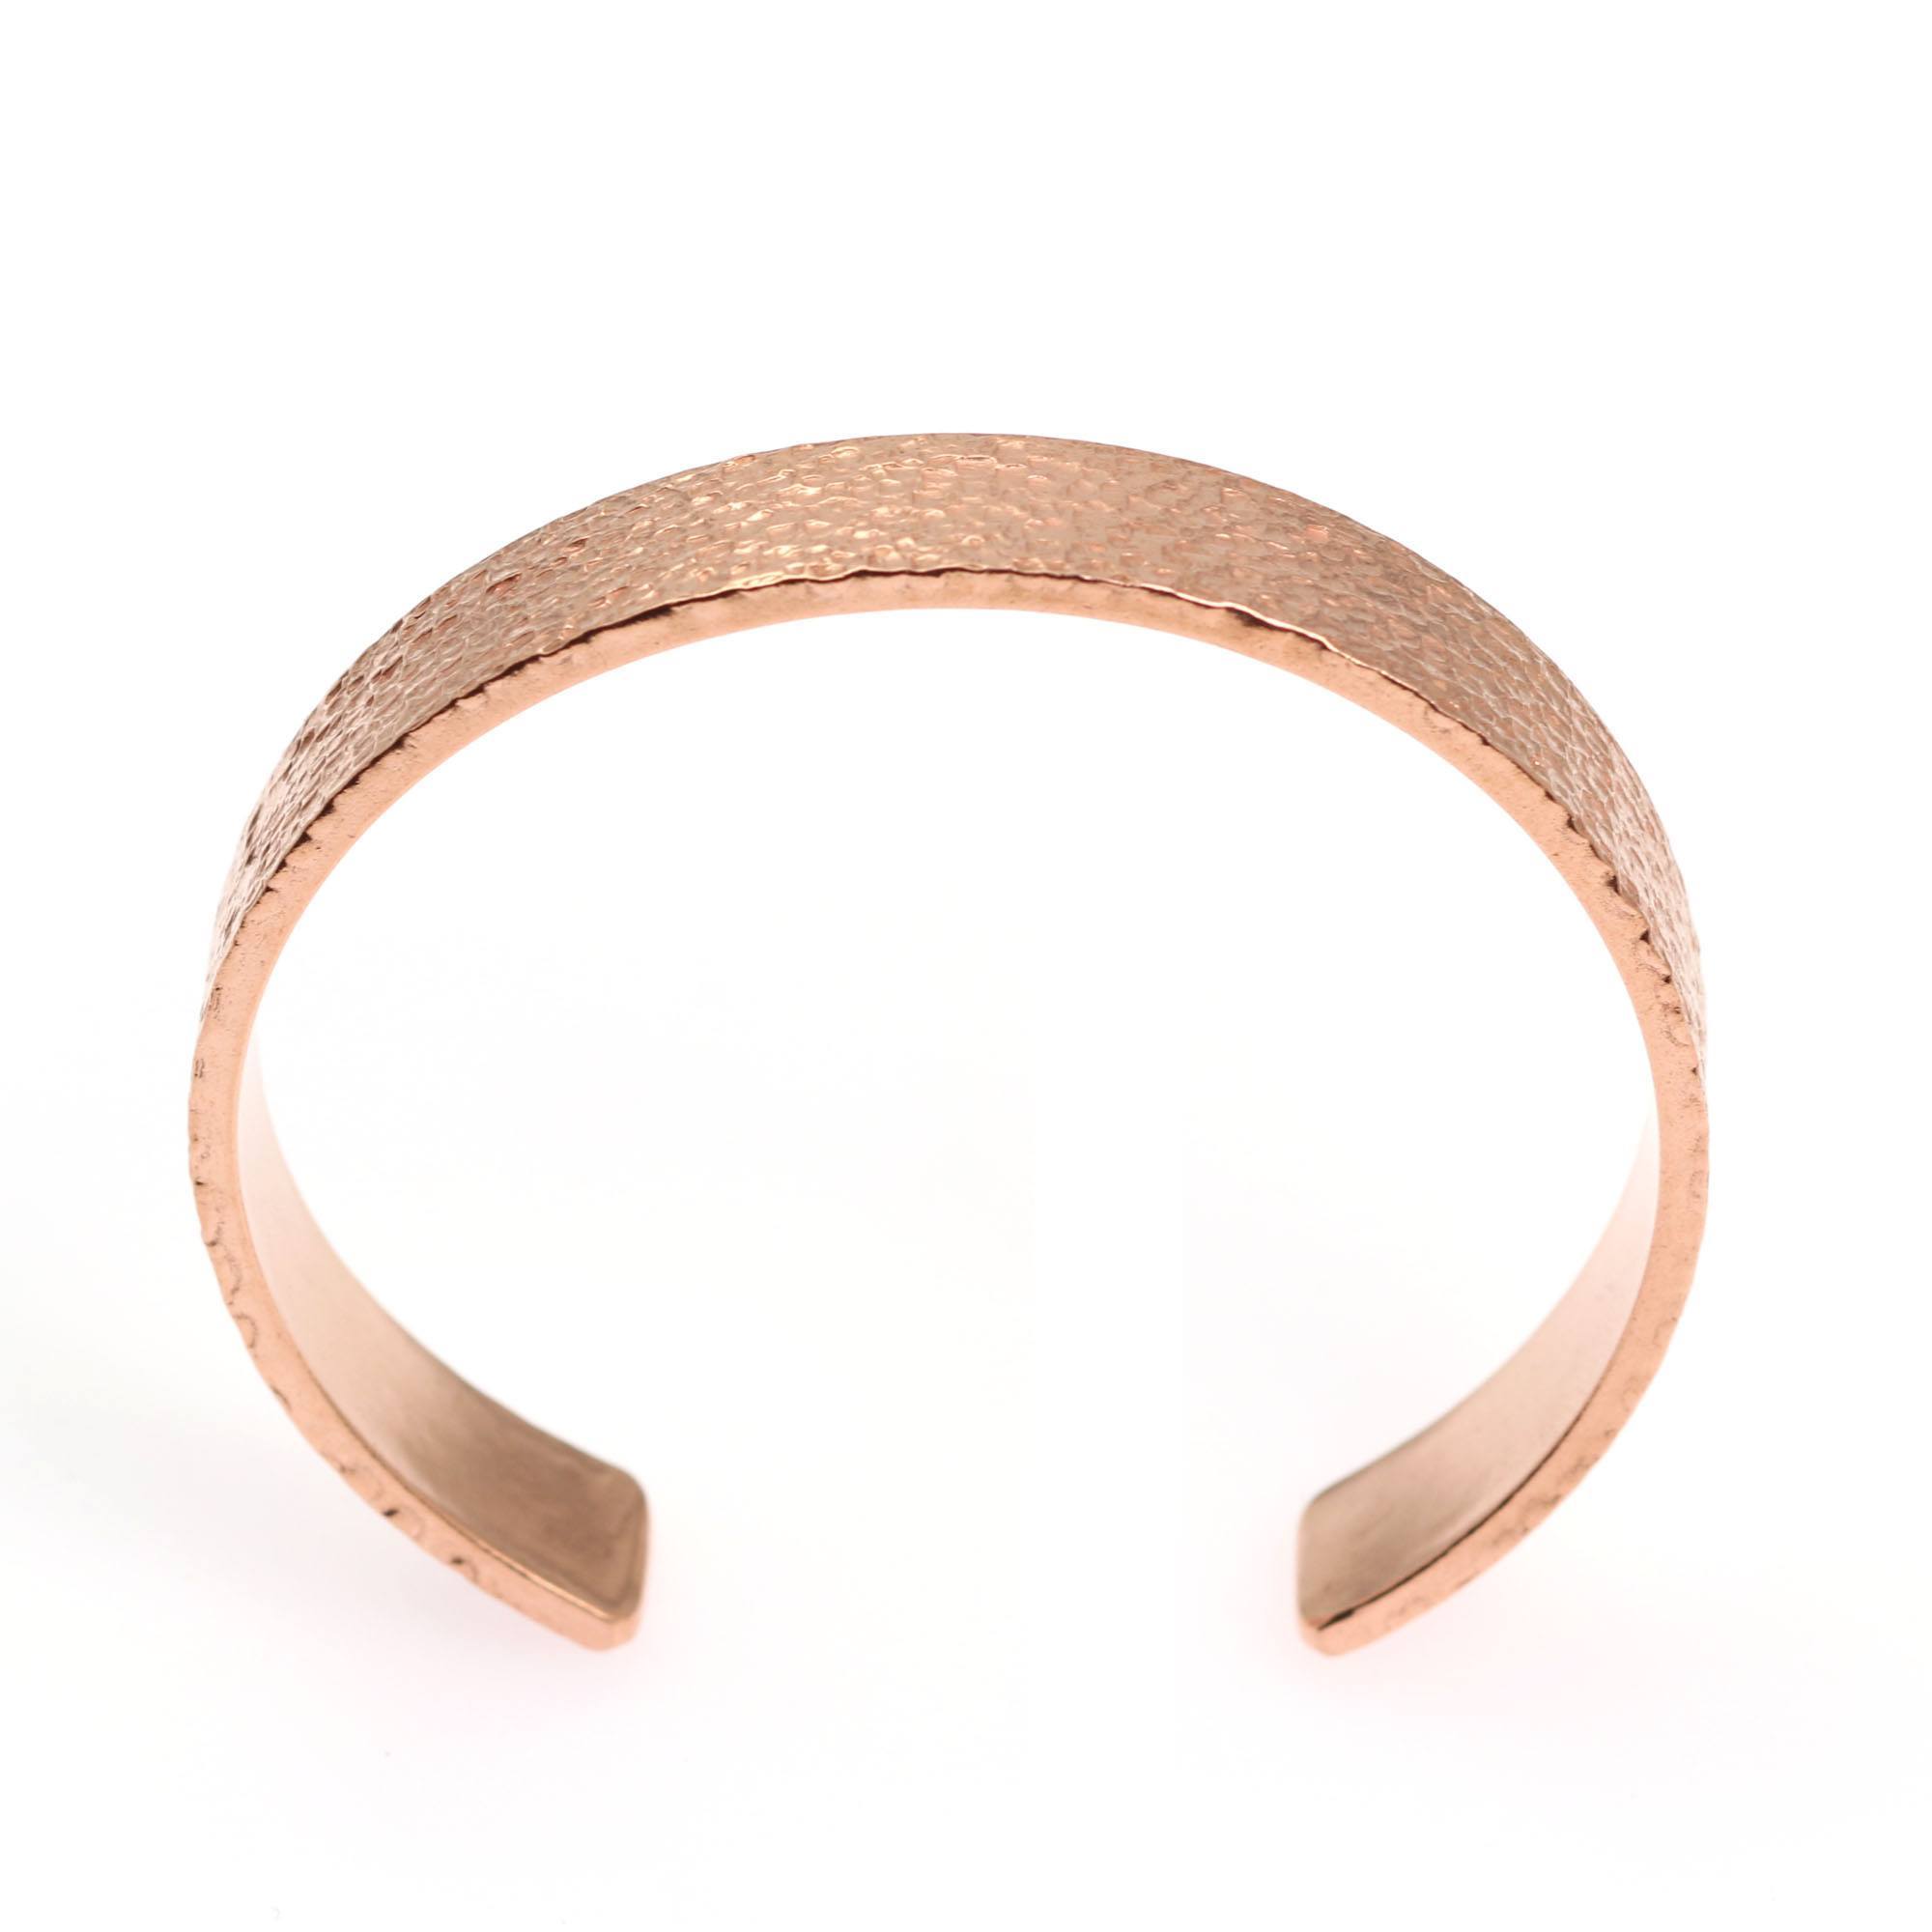 Shape of 10mm Wide Texturized Copper Cuff Bracelet